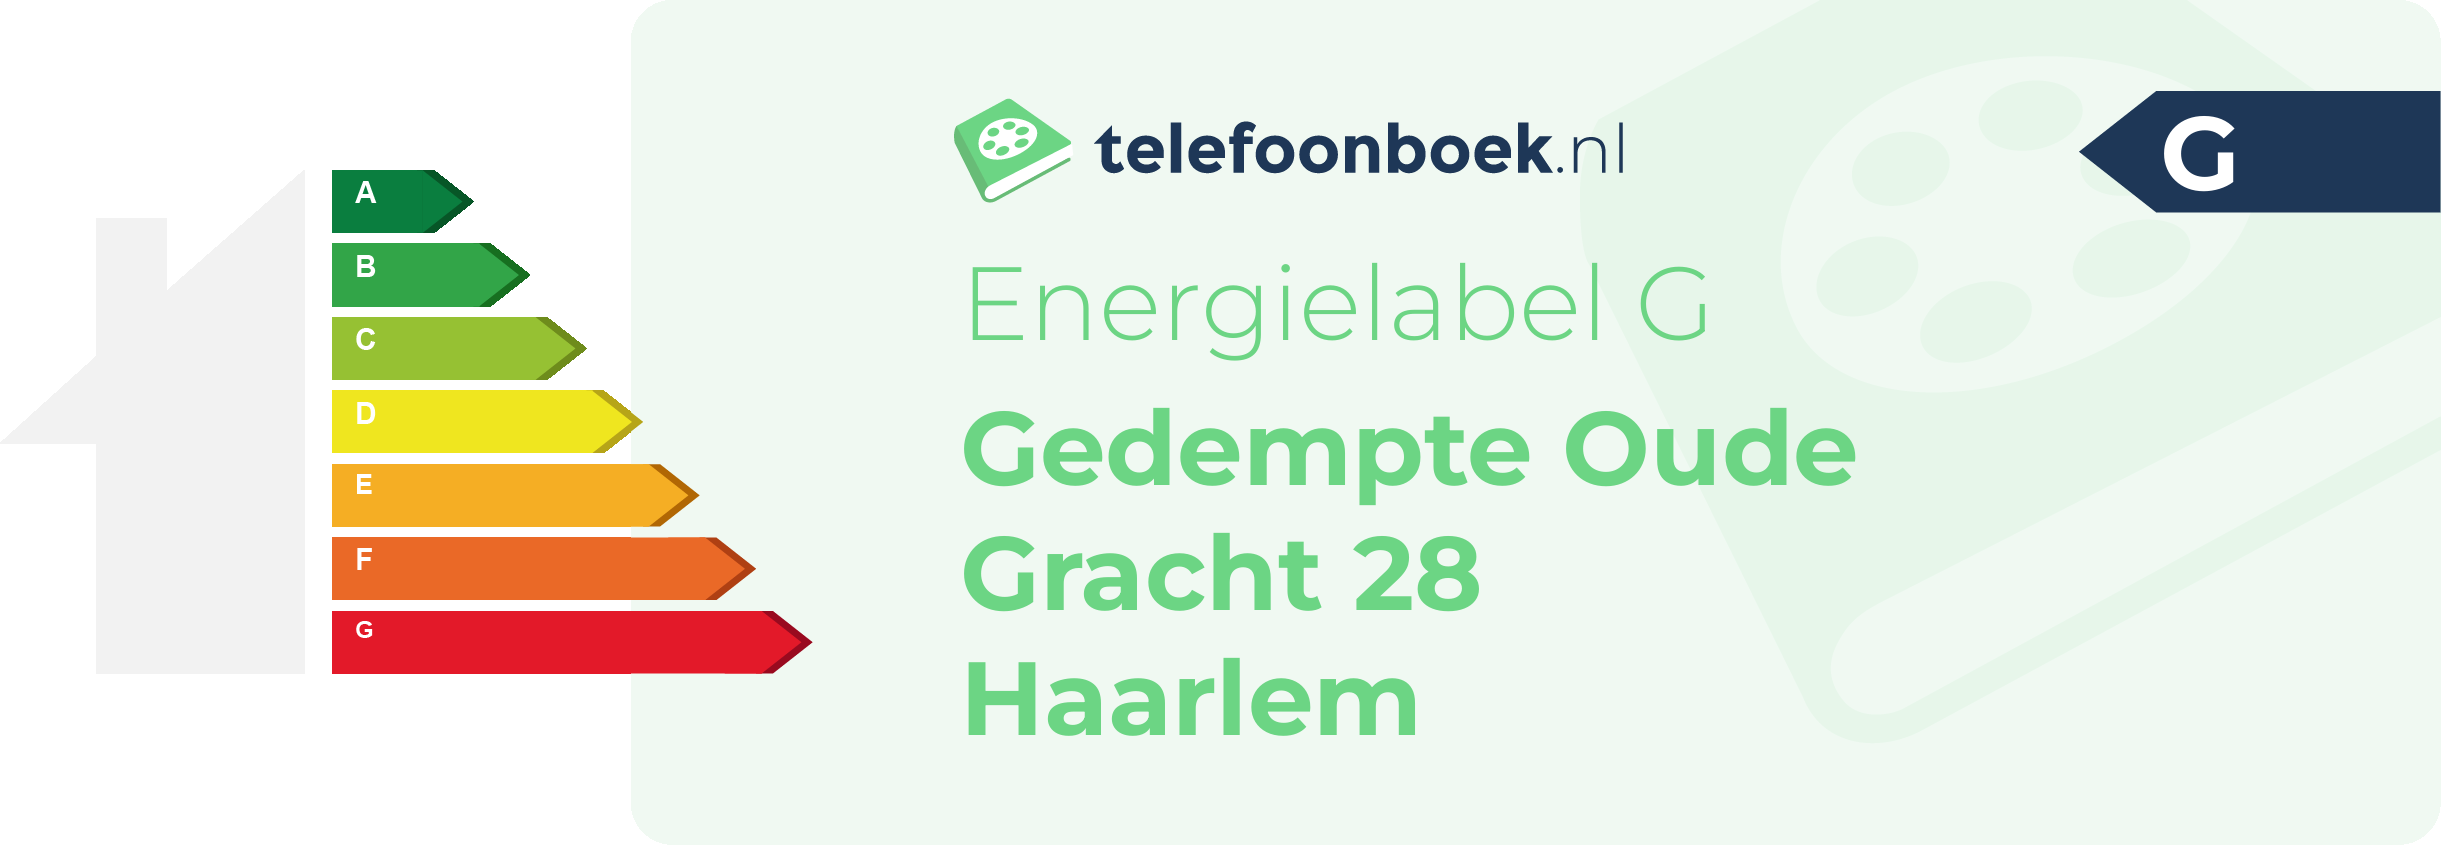 Energielabel Gedempte Oude Gracht 28 Haarlem